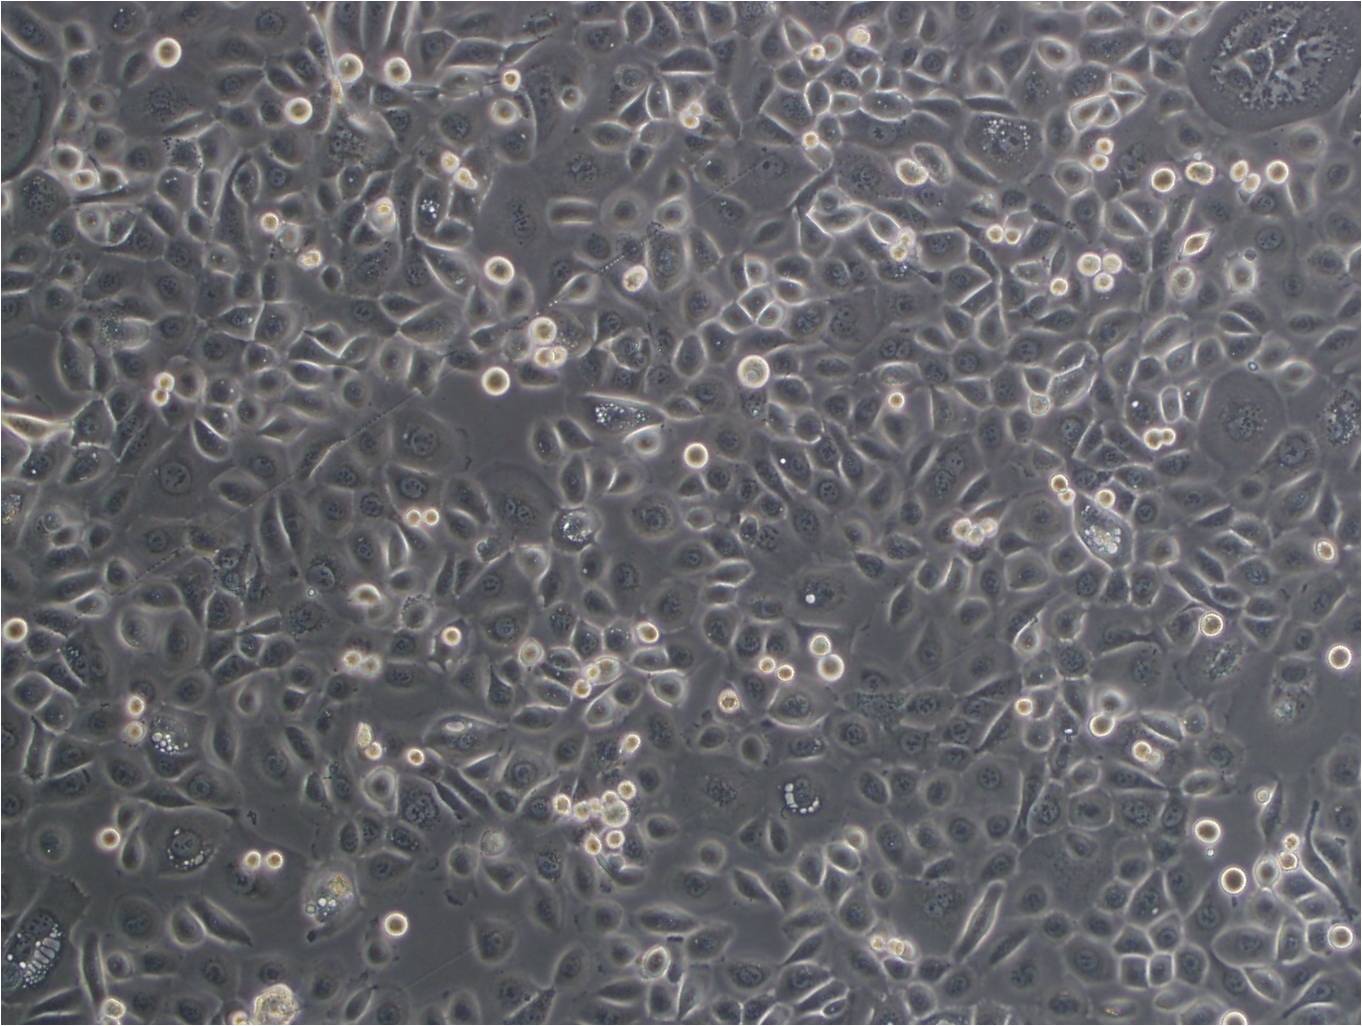 UM-UC-3 epithelioid cells人膀胱移行癌细胞系